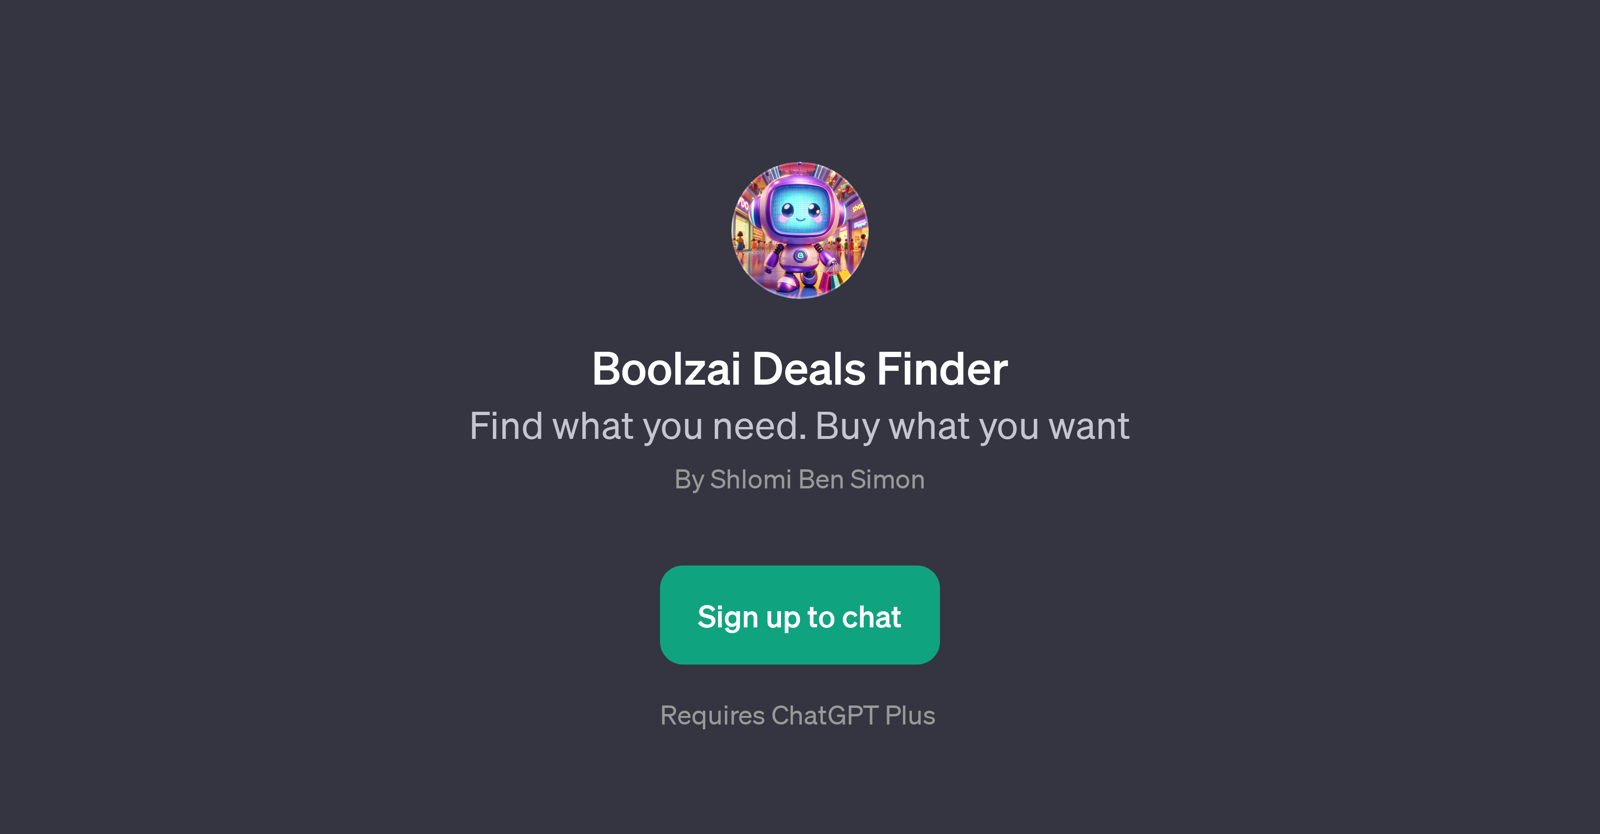 Boolzai Deals Finder website